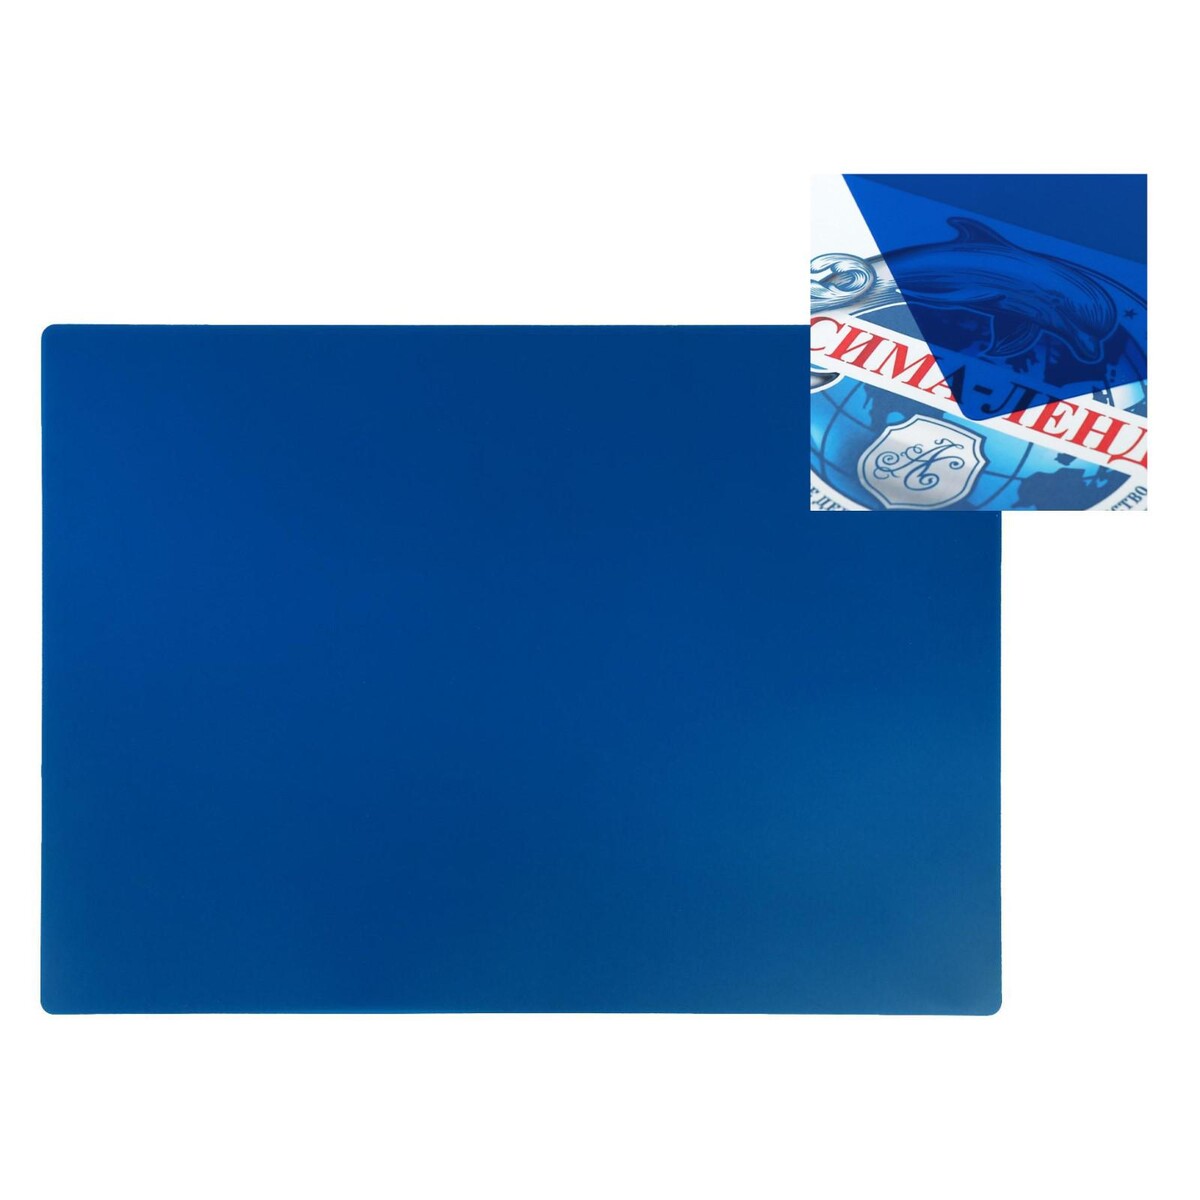 Накладка на стол пластиковая а3, 460 х 330 мм, 500 мкм, прозрачная, цвет темно-синий (подходит для офиса) накладка на стол пластиковая а4 345 x 245 мм 500 мкм обучающая calligrata